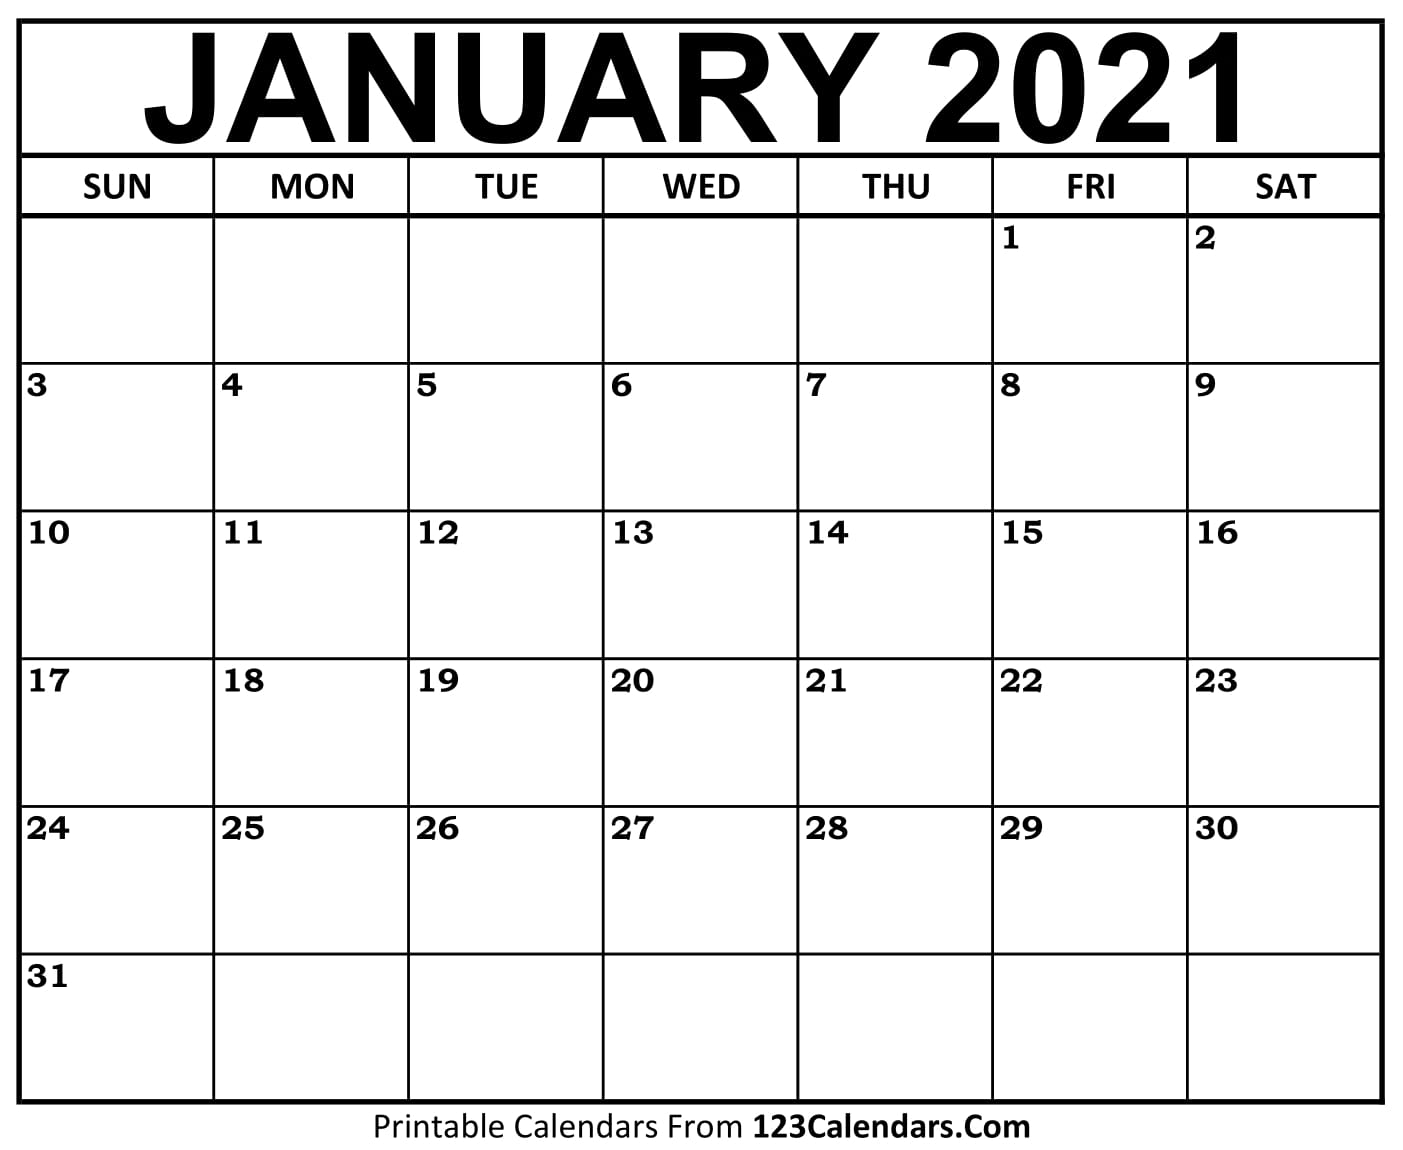 Print Calendar January 2022 Printable January 2022 Calendar Templates - 123Calendars.com